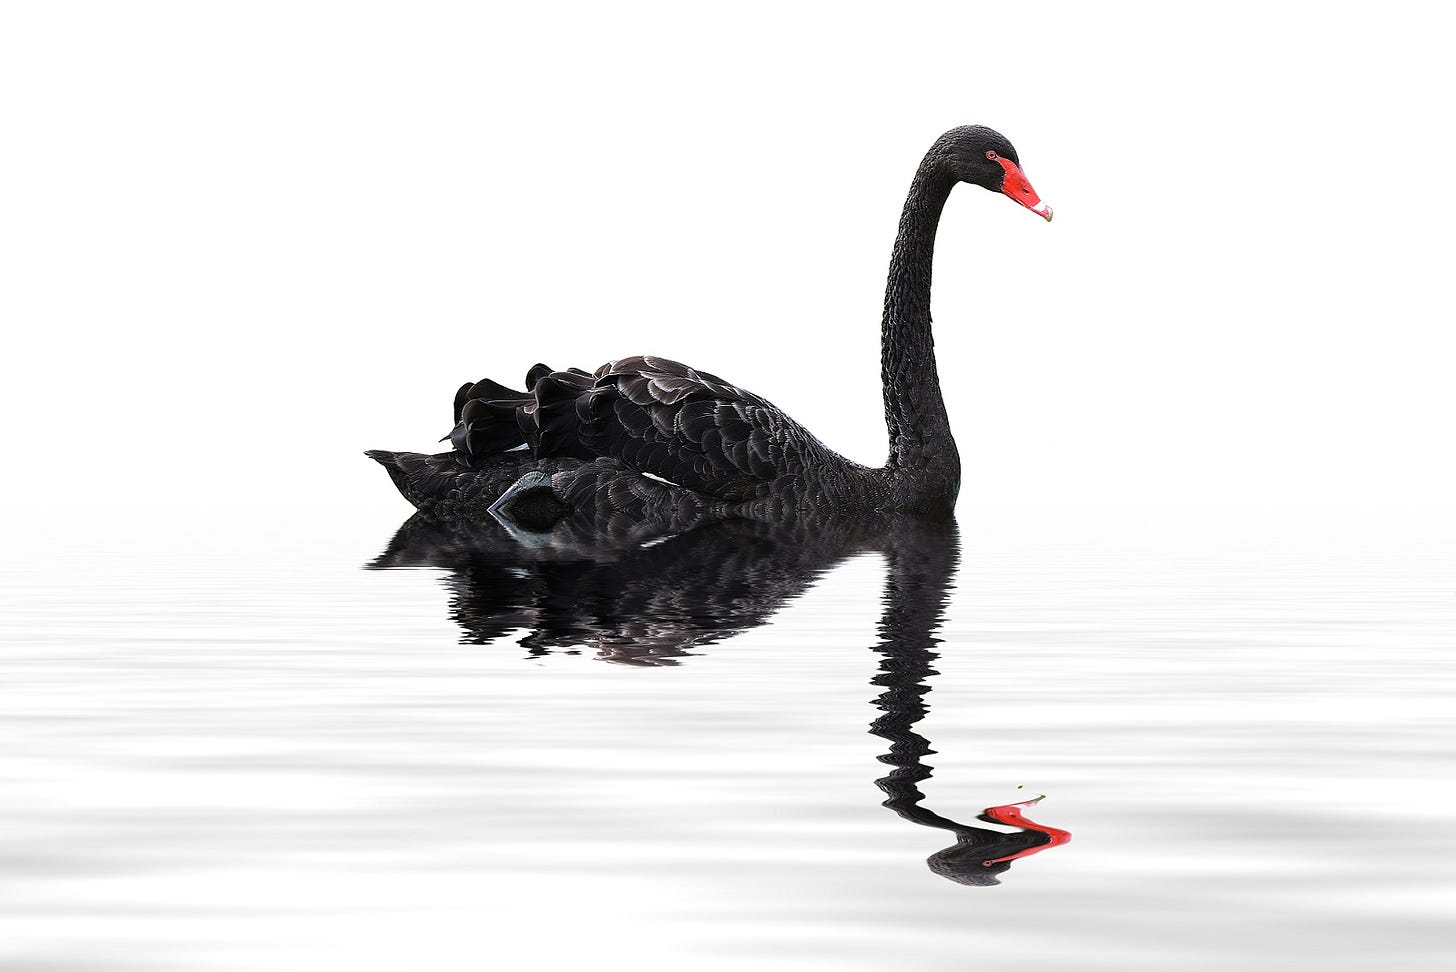 Image of a black swan in water